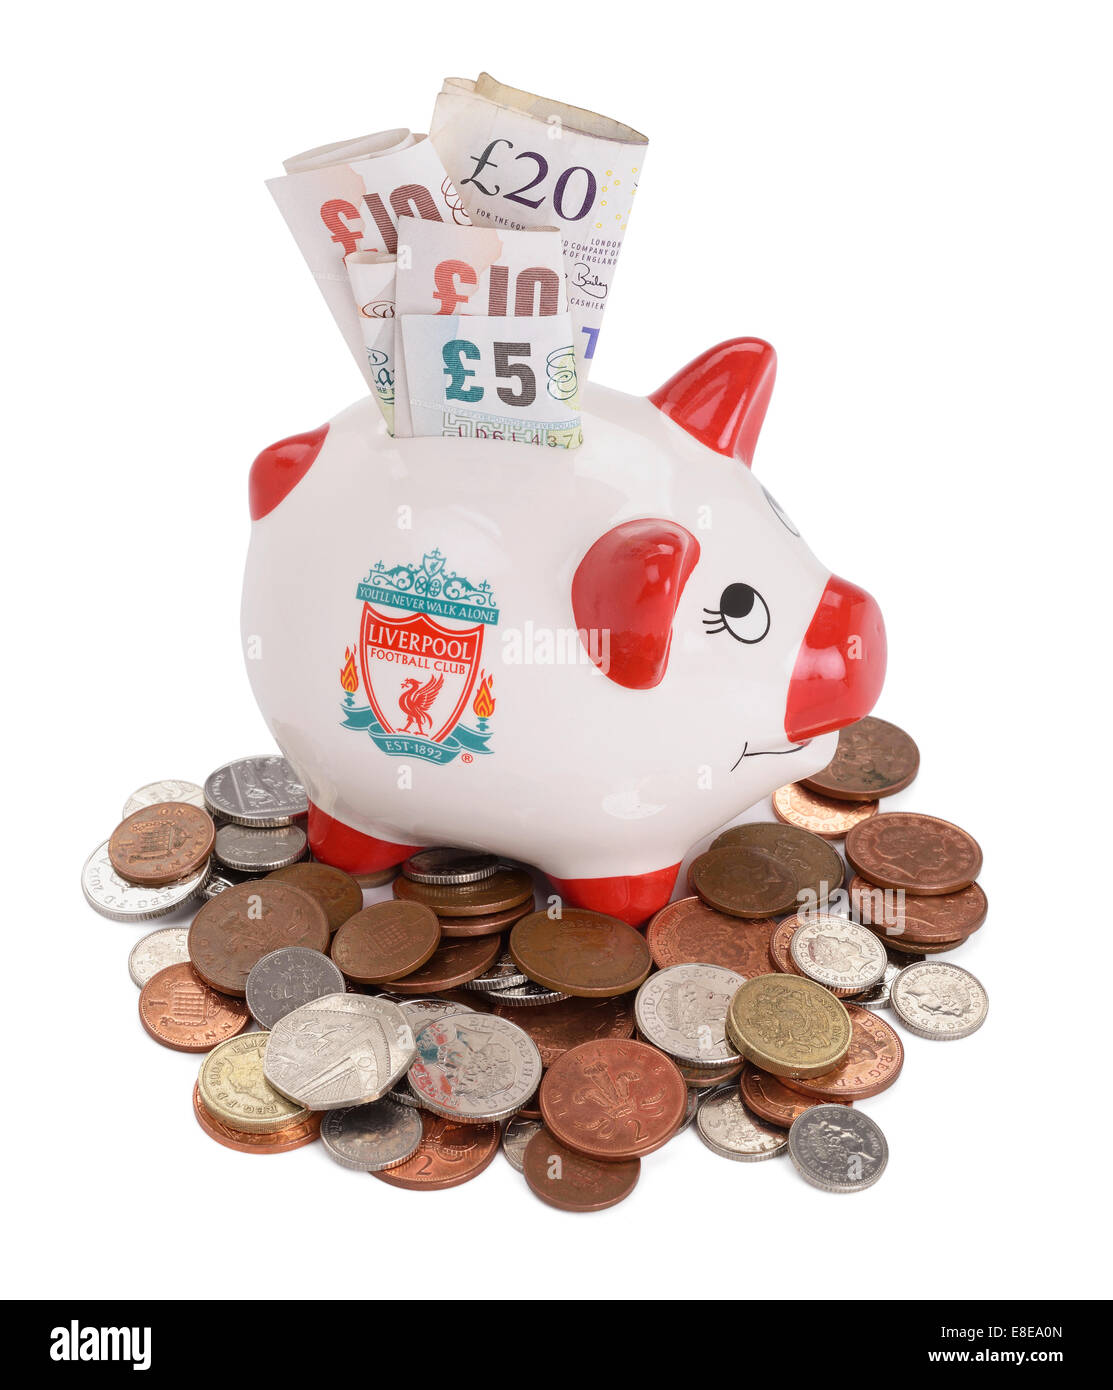 Liverpool Football Club piggy bank Stock Photo